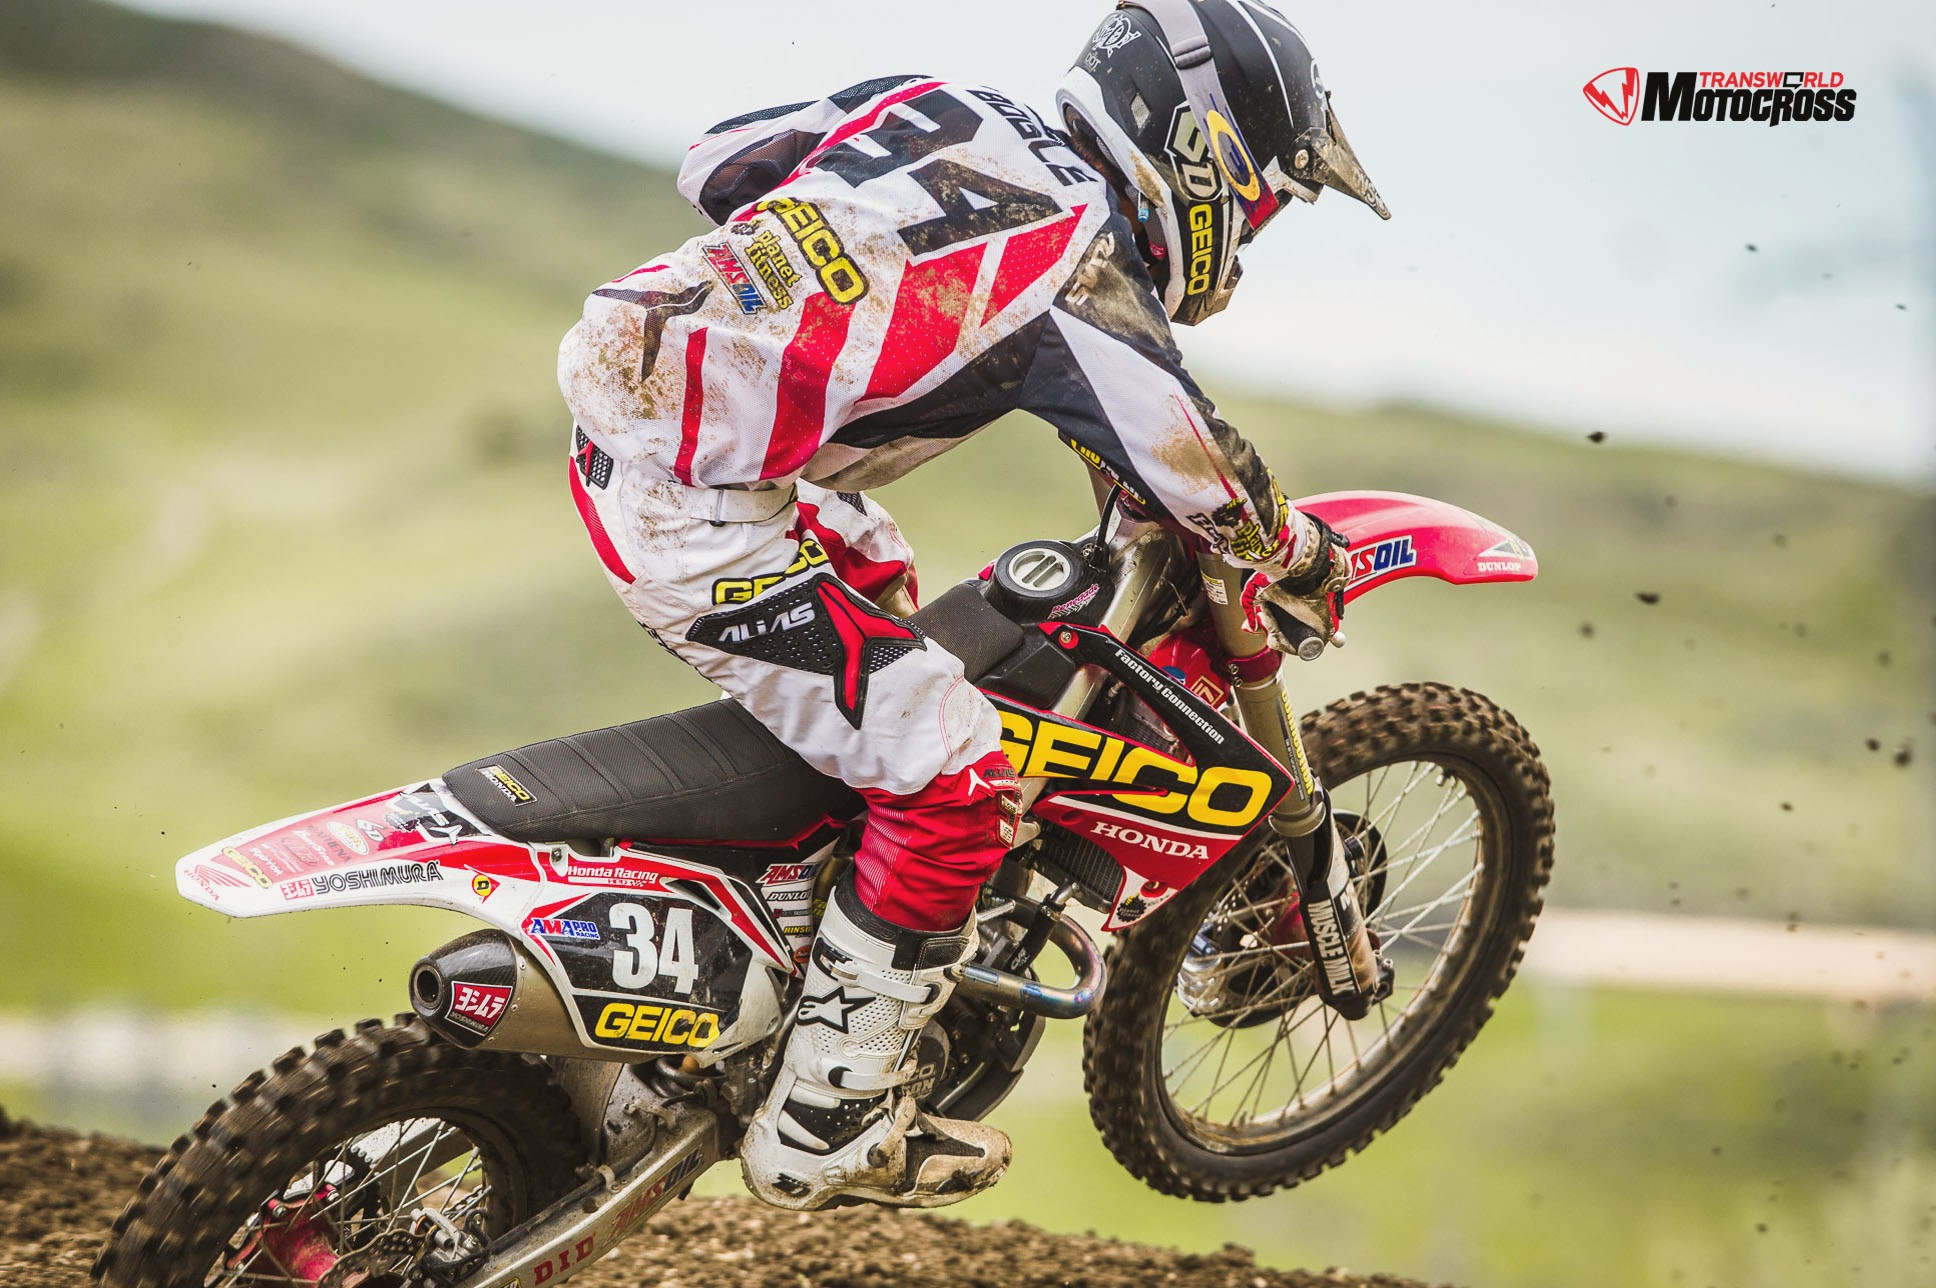 Motocross Wallpapers HD Download